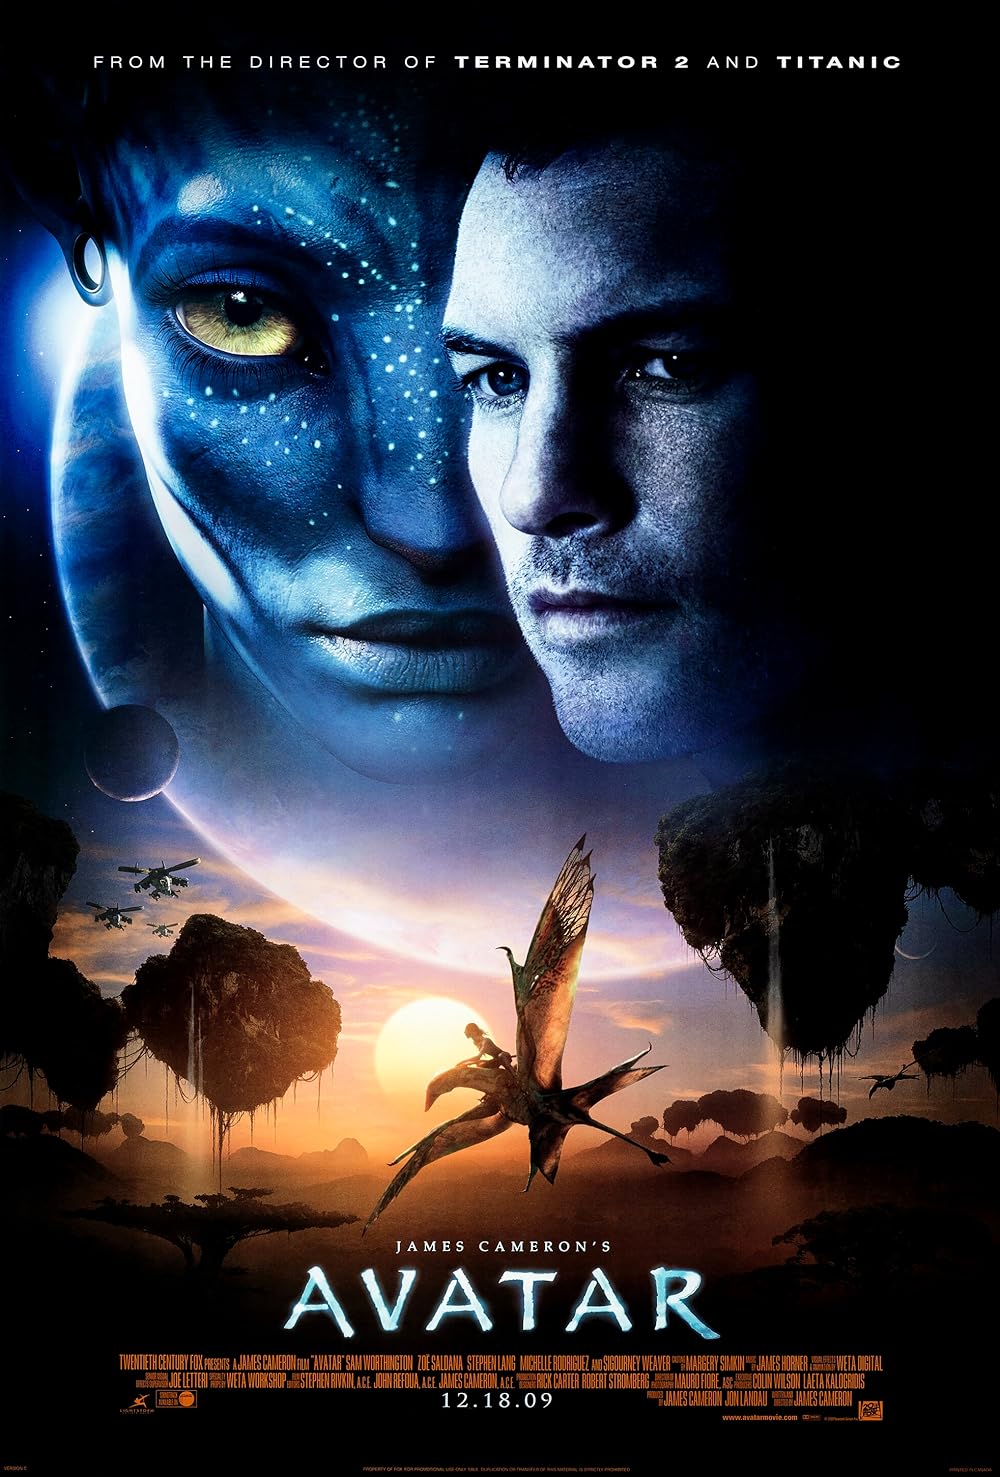 Avatar (2009) Theatrical Cut 384Kbps 23.976Fps 48Khz 5.1Ch 3D BluRay Turkish Audio TAC